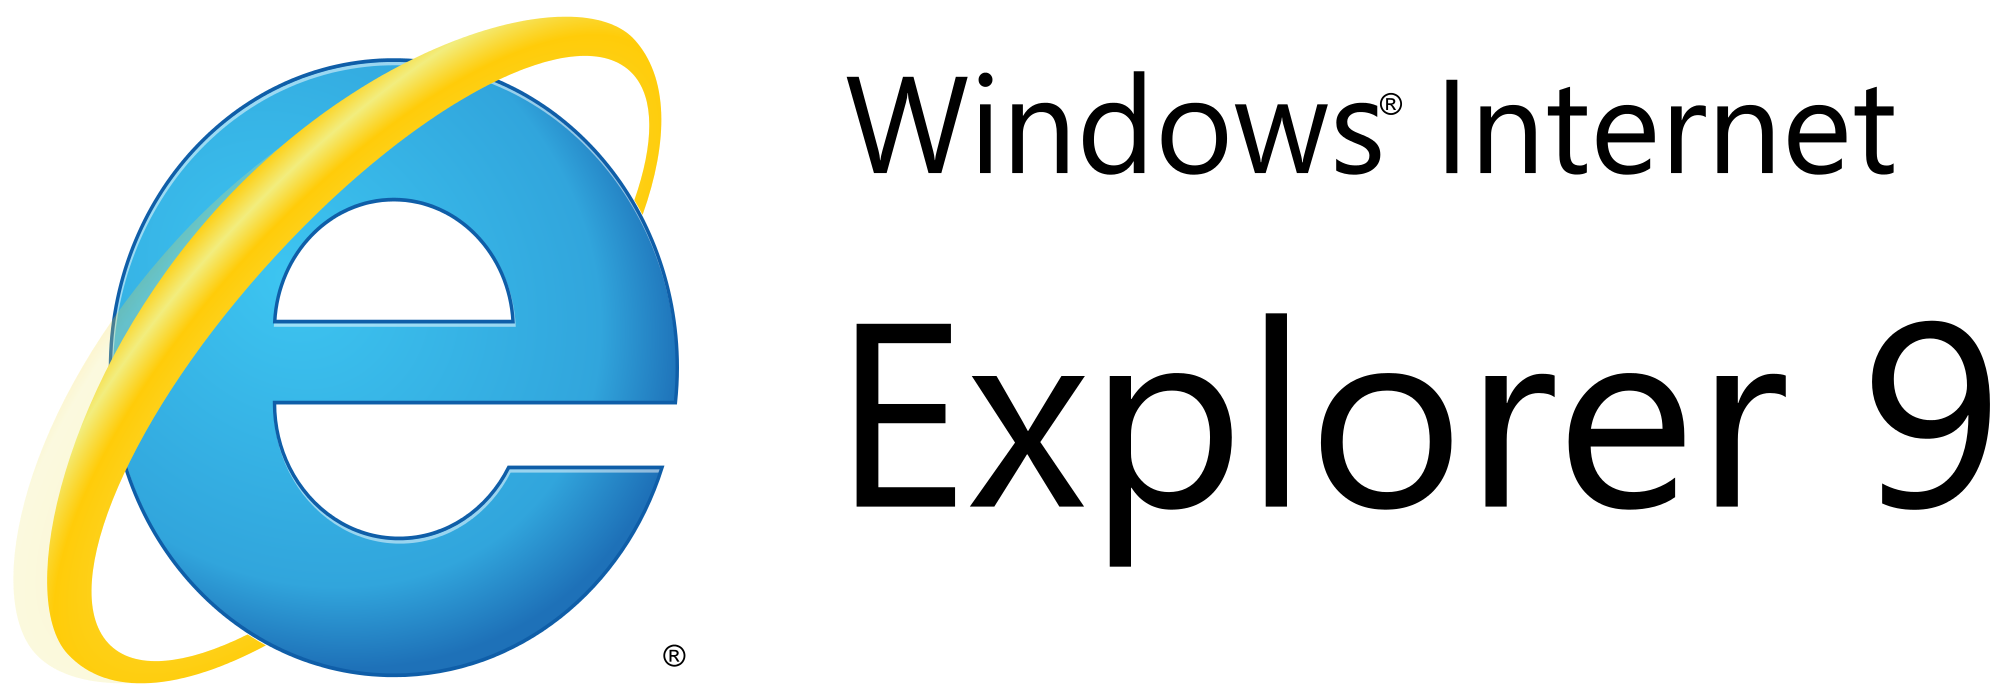 Windows Internet Explorer 9 Logo.svg